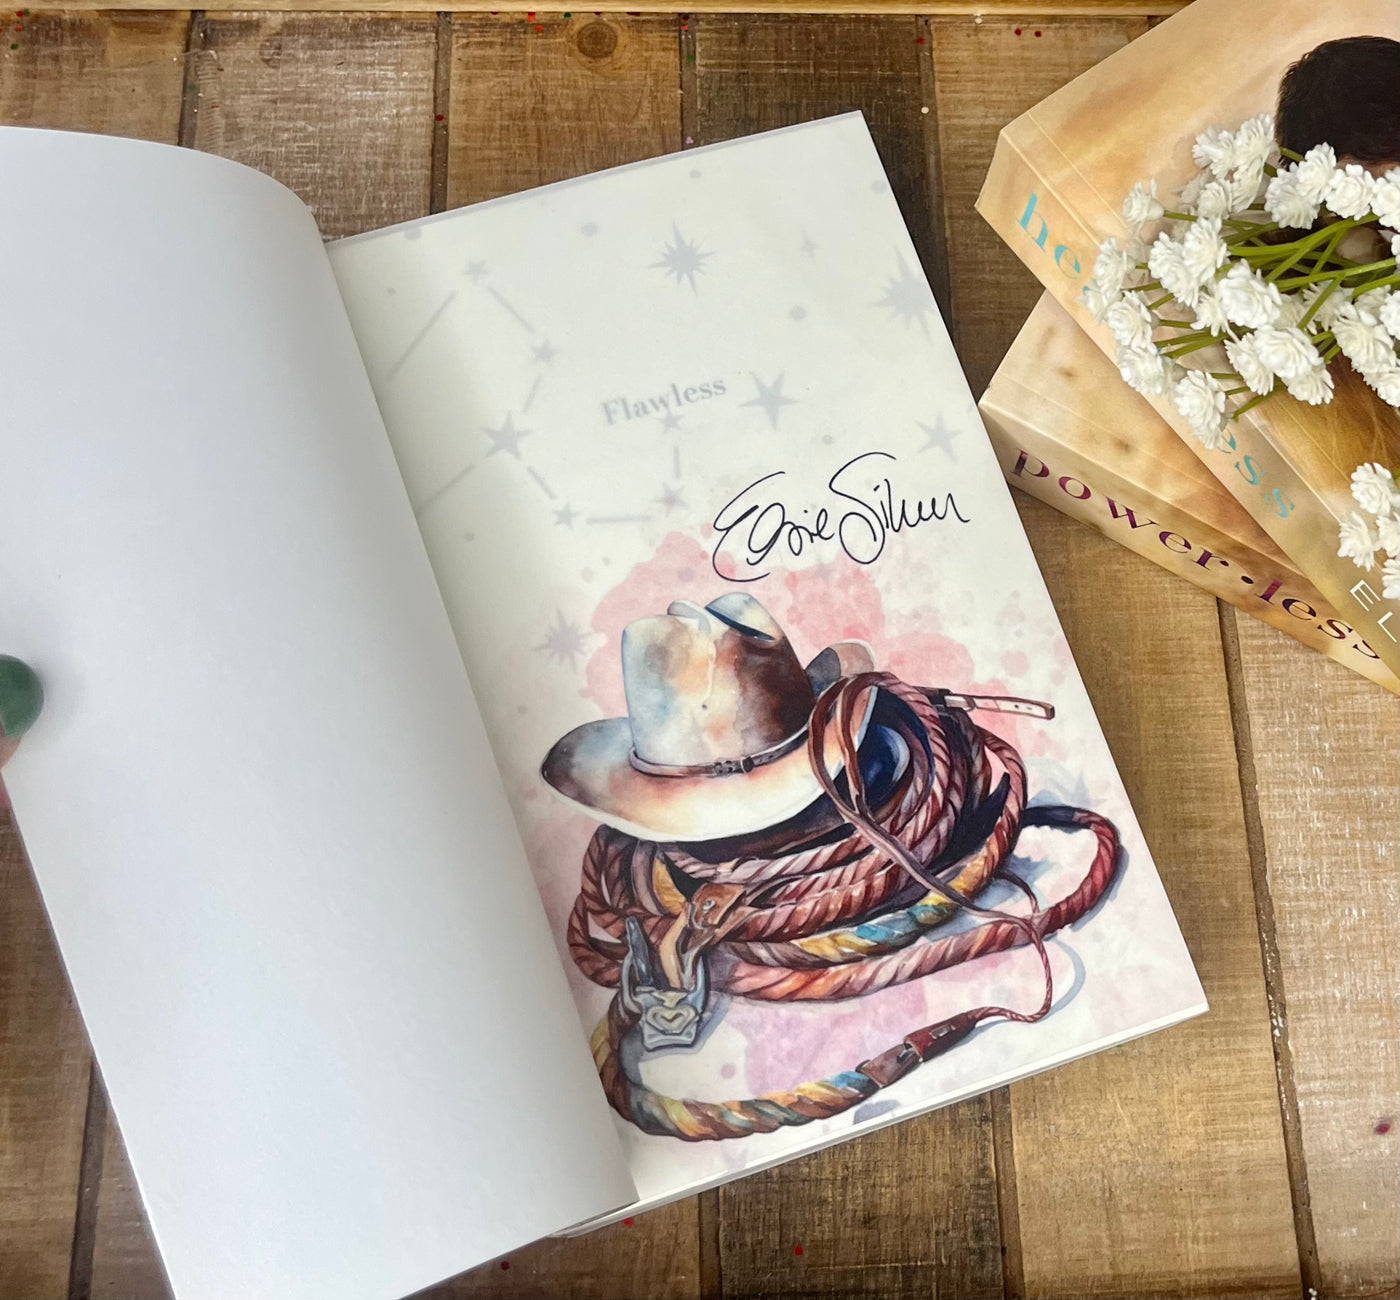 Elsie Silver- Cowboy Hat Novel Note-Digitally Signed Overlay Print